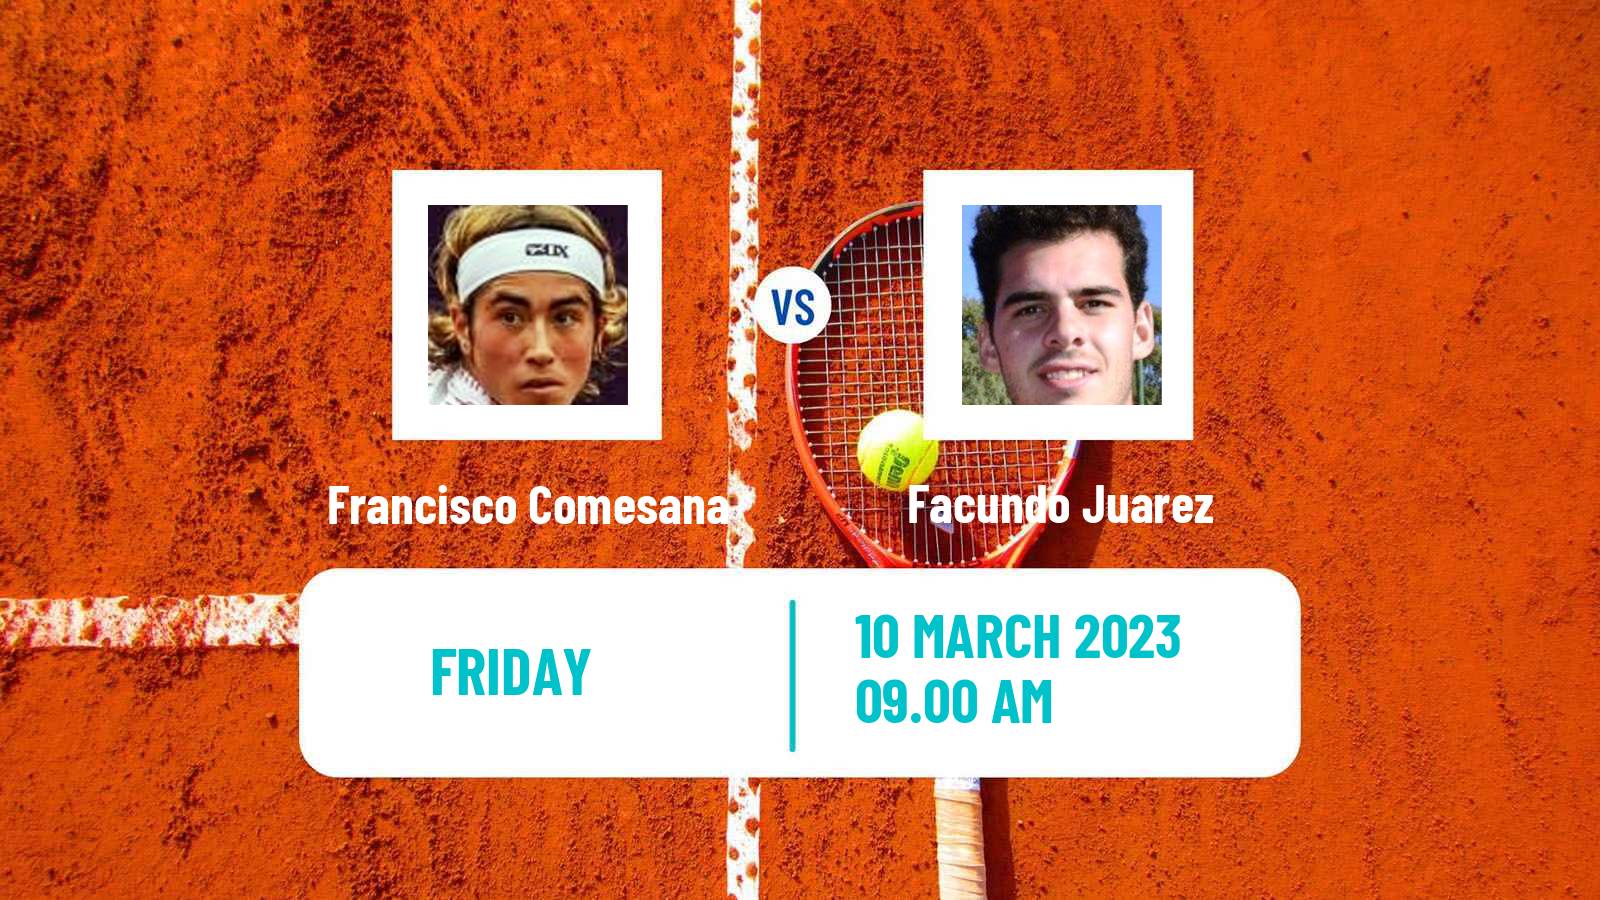 Tennis ITF Tournaments Francisco Comesana - Facundo Juarez